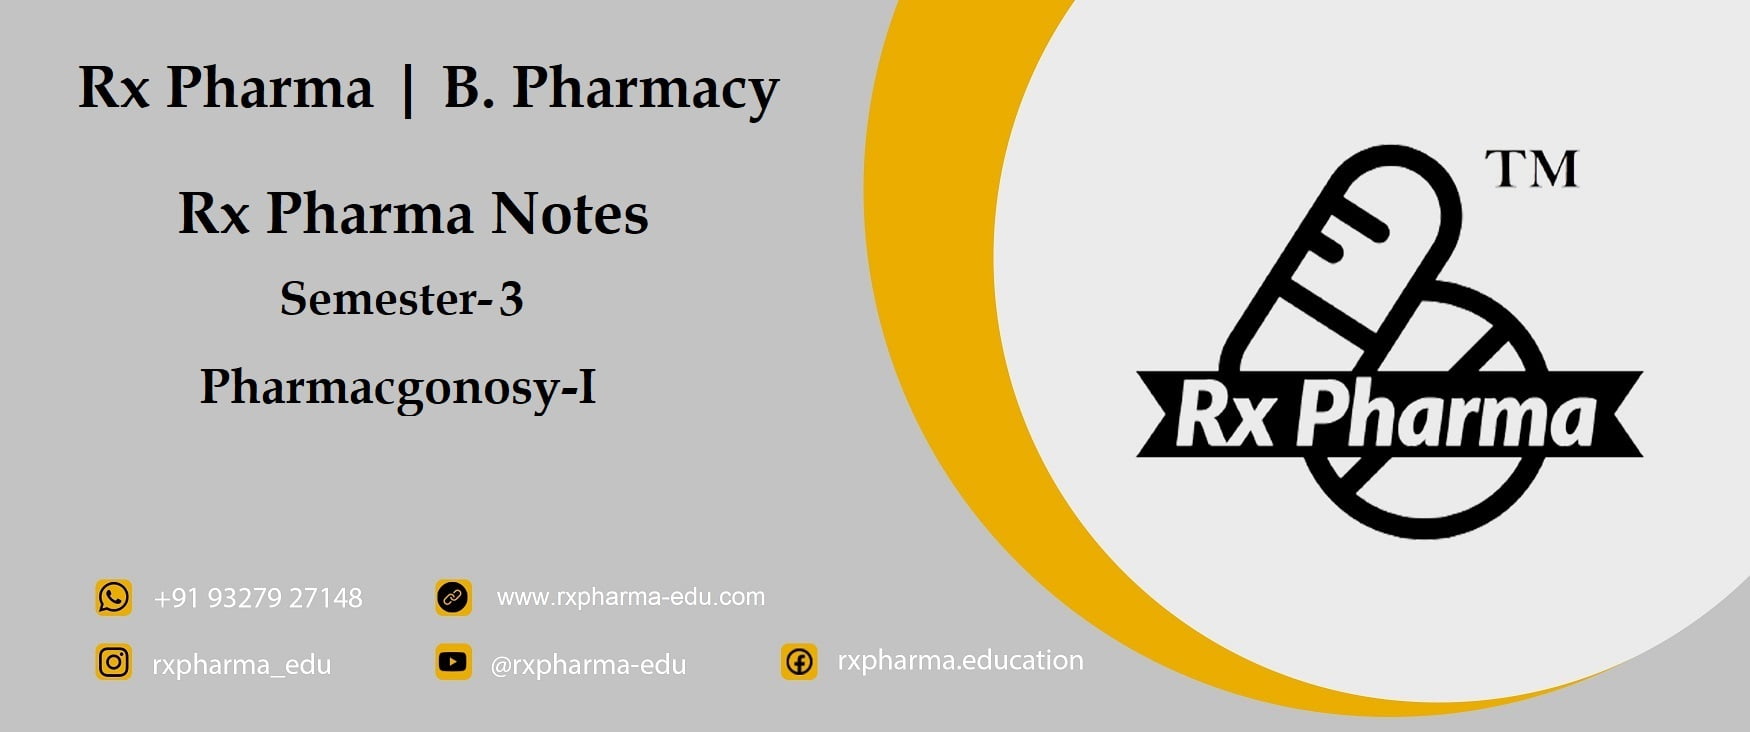 Pharmacognosy-1 Notes Banner